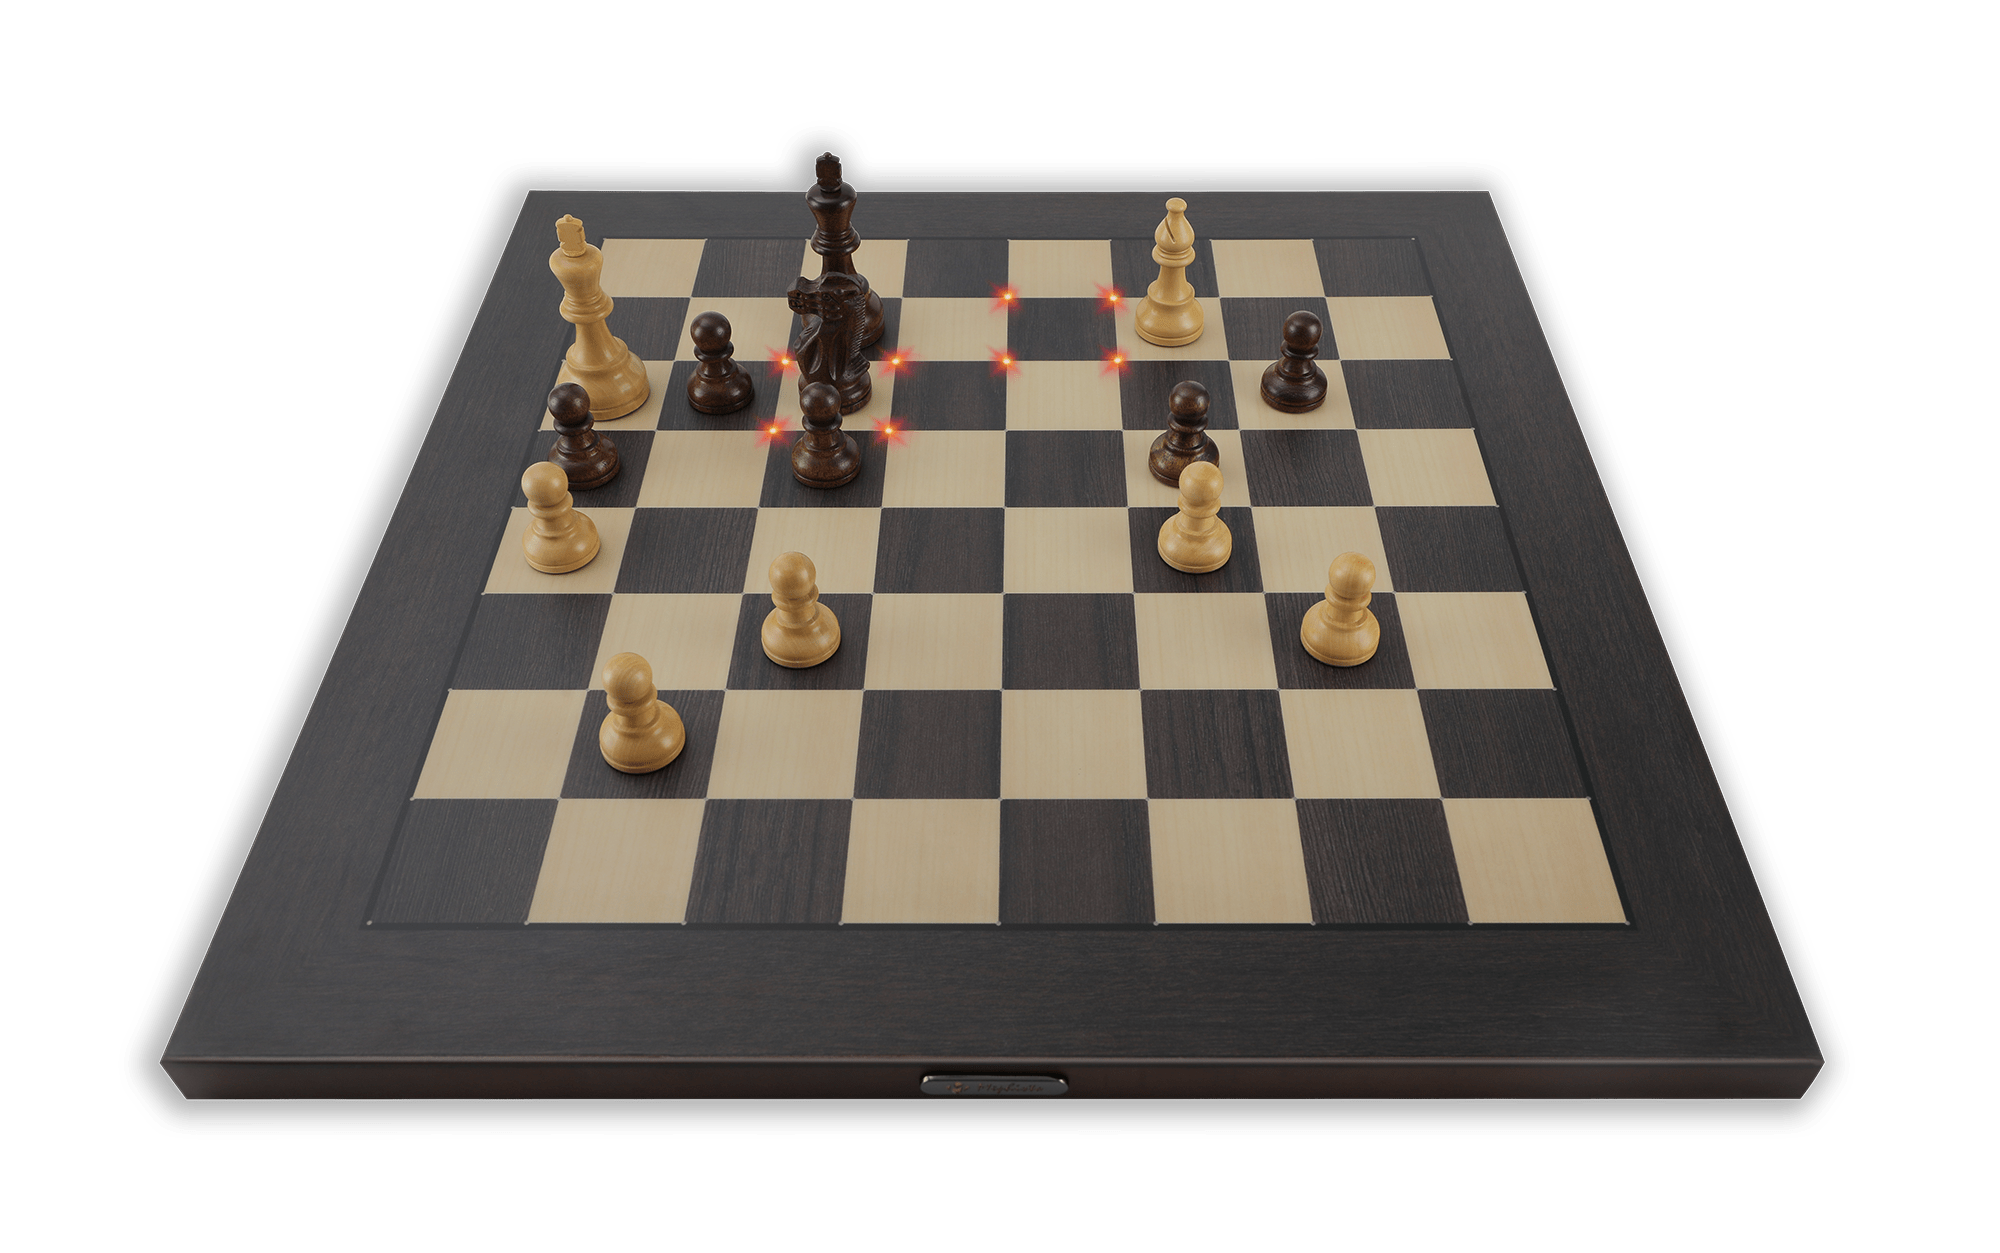 Mephisto Phoenix T 21.7 inch Chess Board - Chess Computer - Chess-House